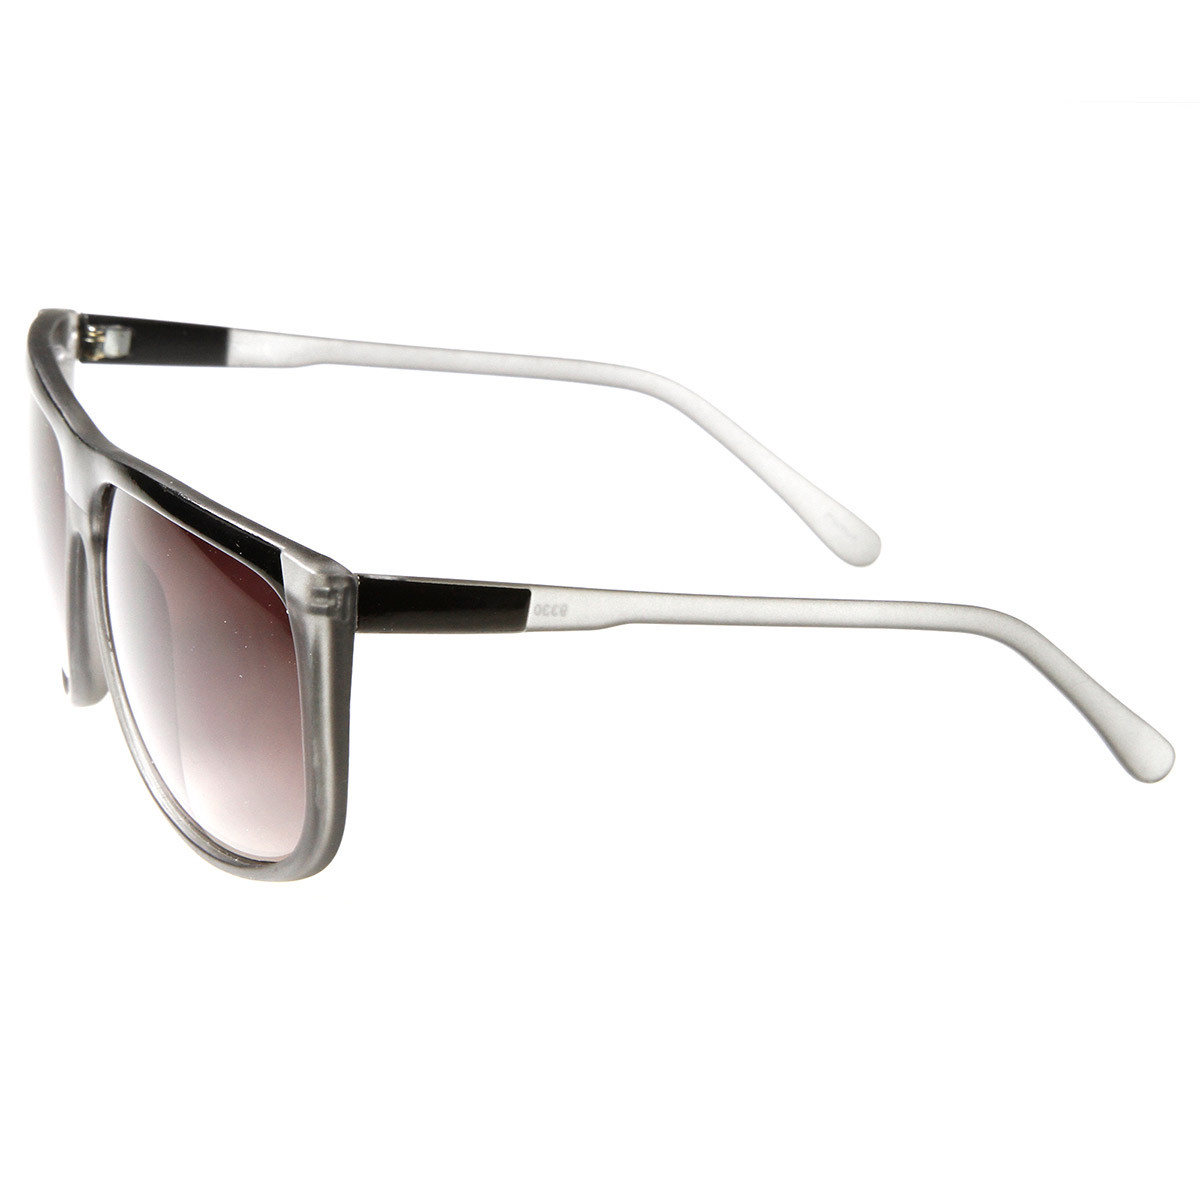 Retro Flat Top Plastic Two-Tone Fashion Aviator Sunglasses - Black